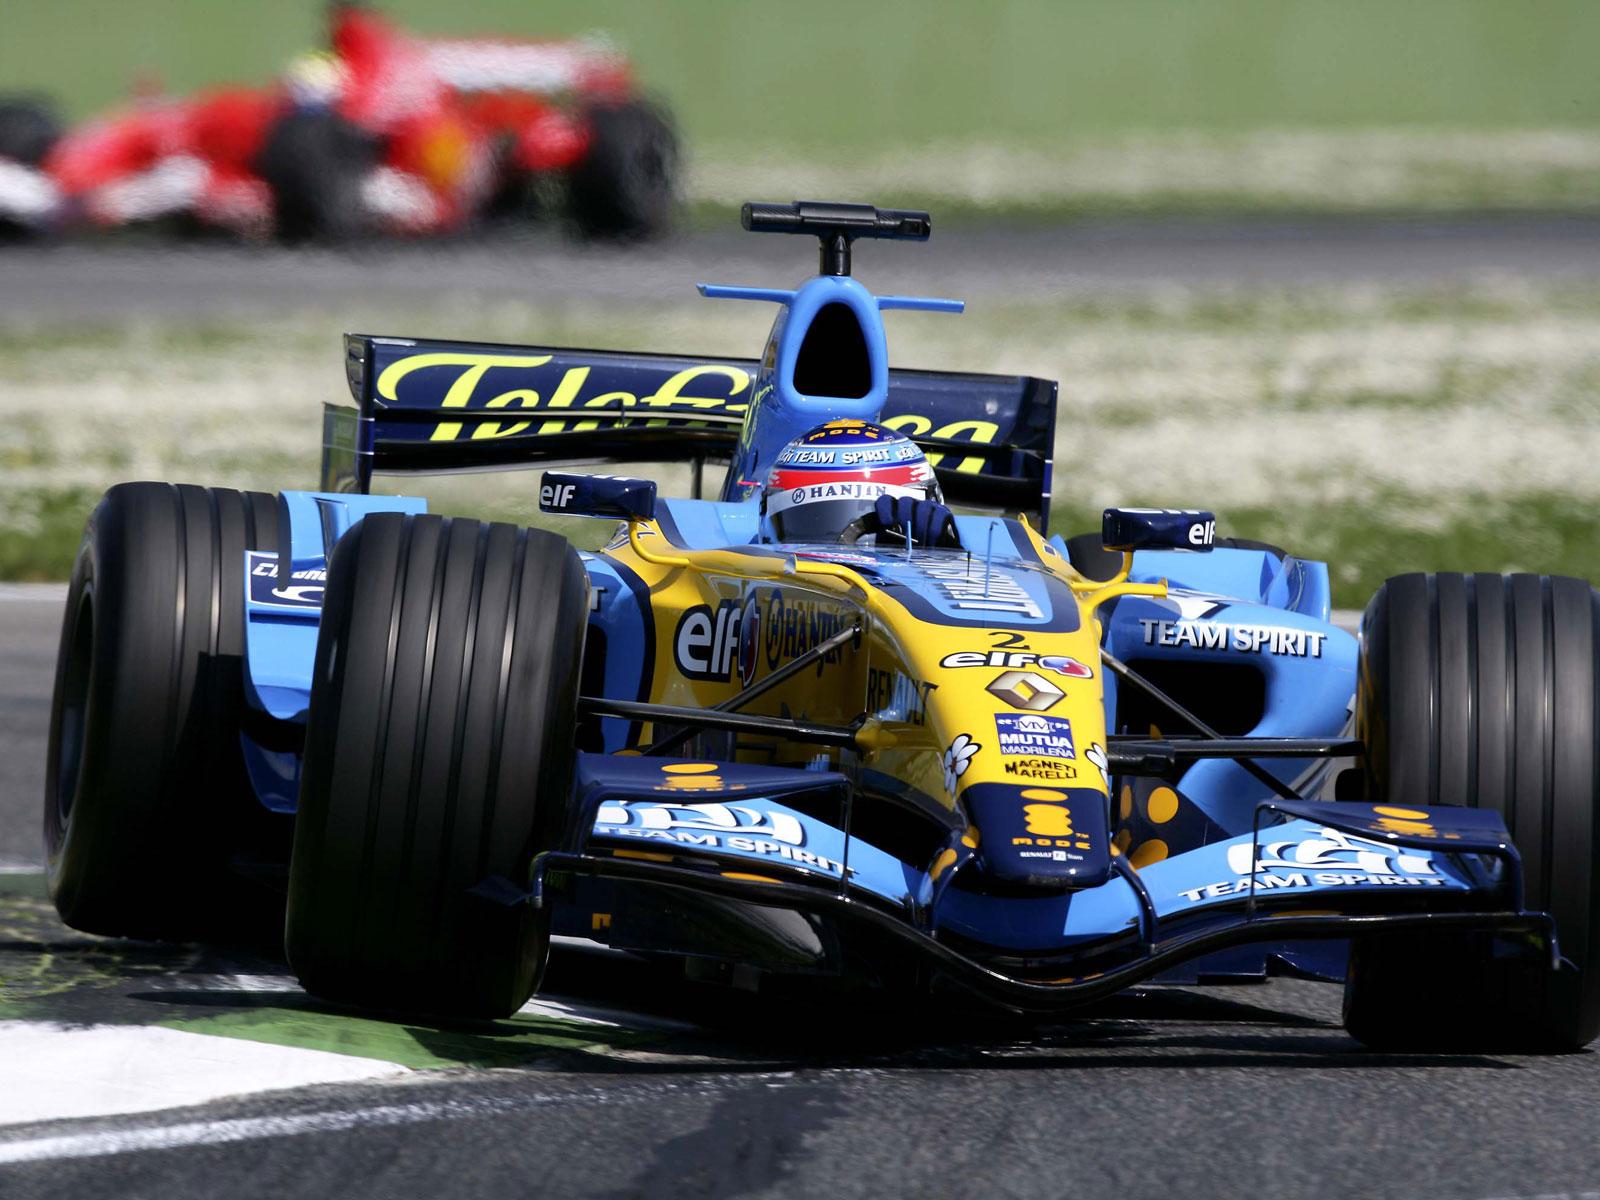 2006 Renault F1 R26